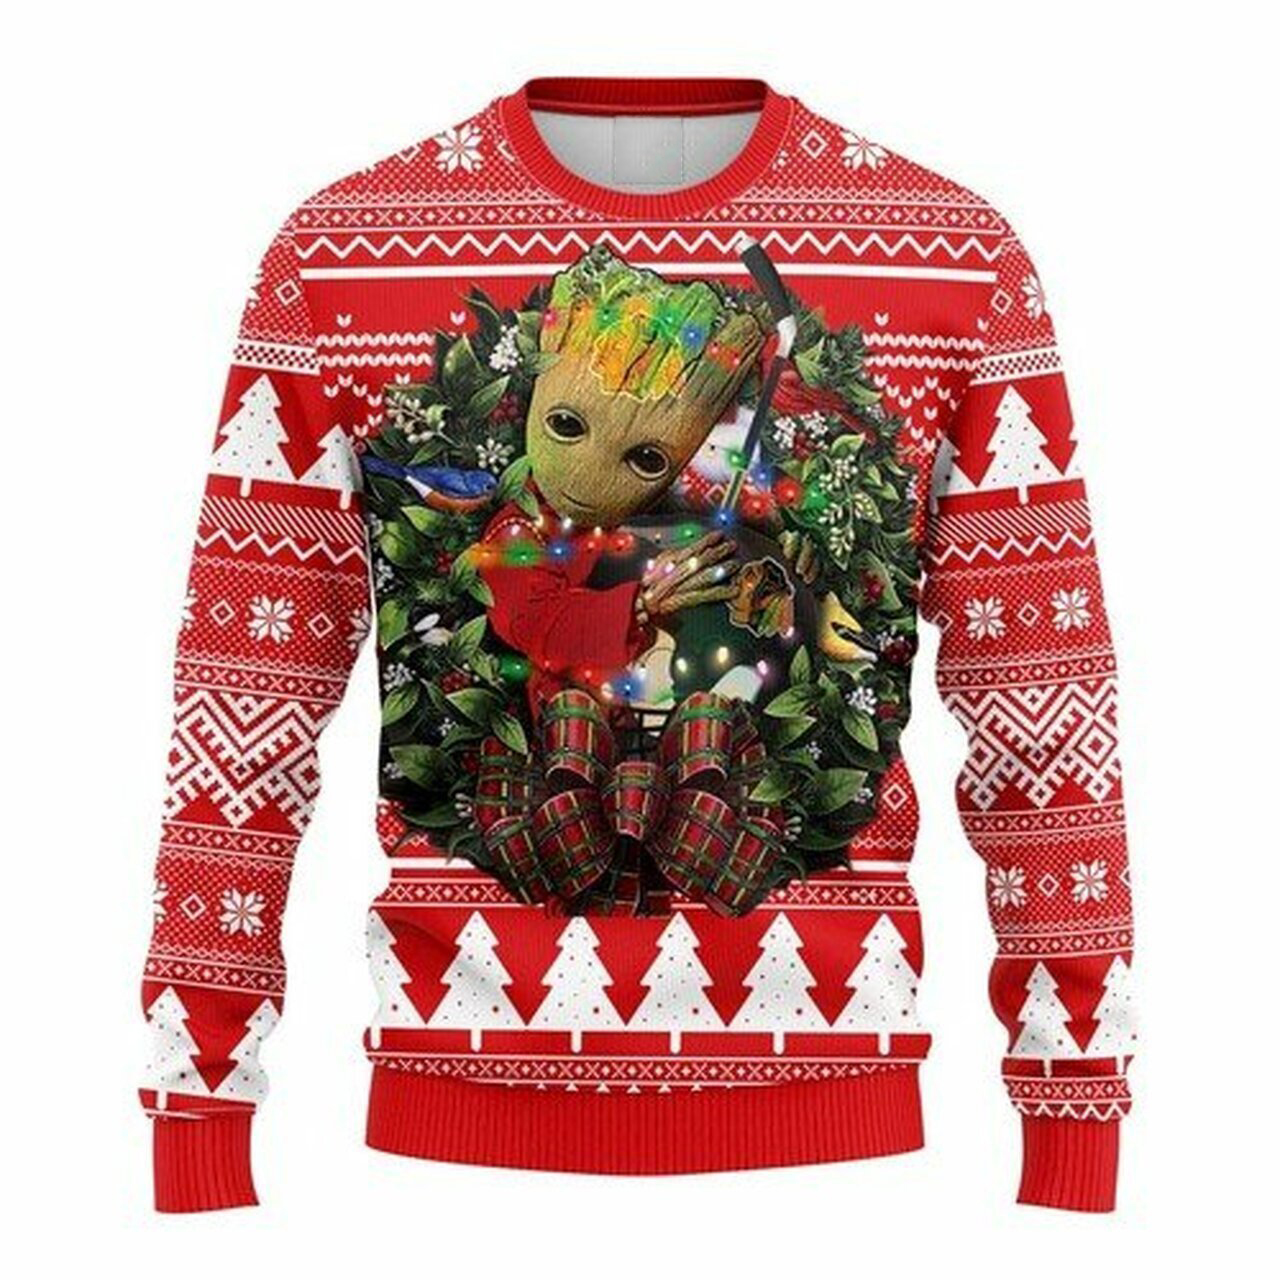 NHL Chicago Blackhawks Groot hug ugly christmas sweater